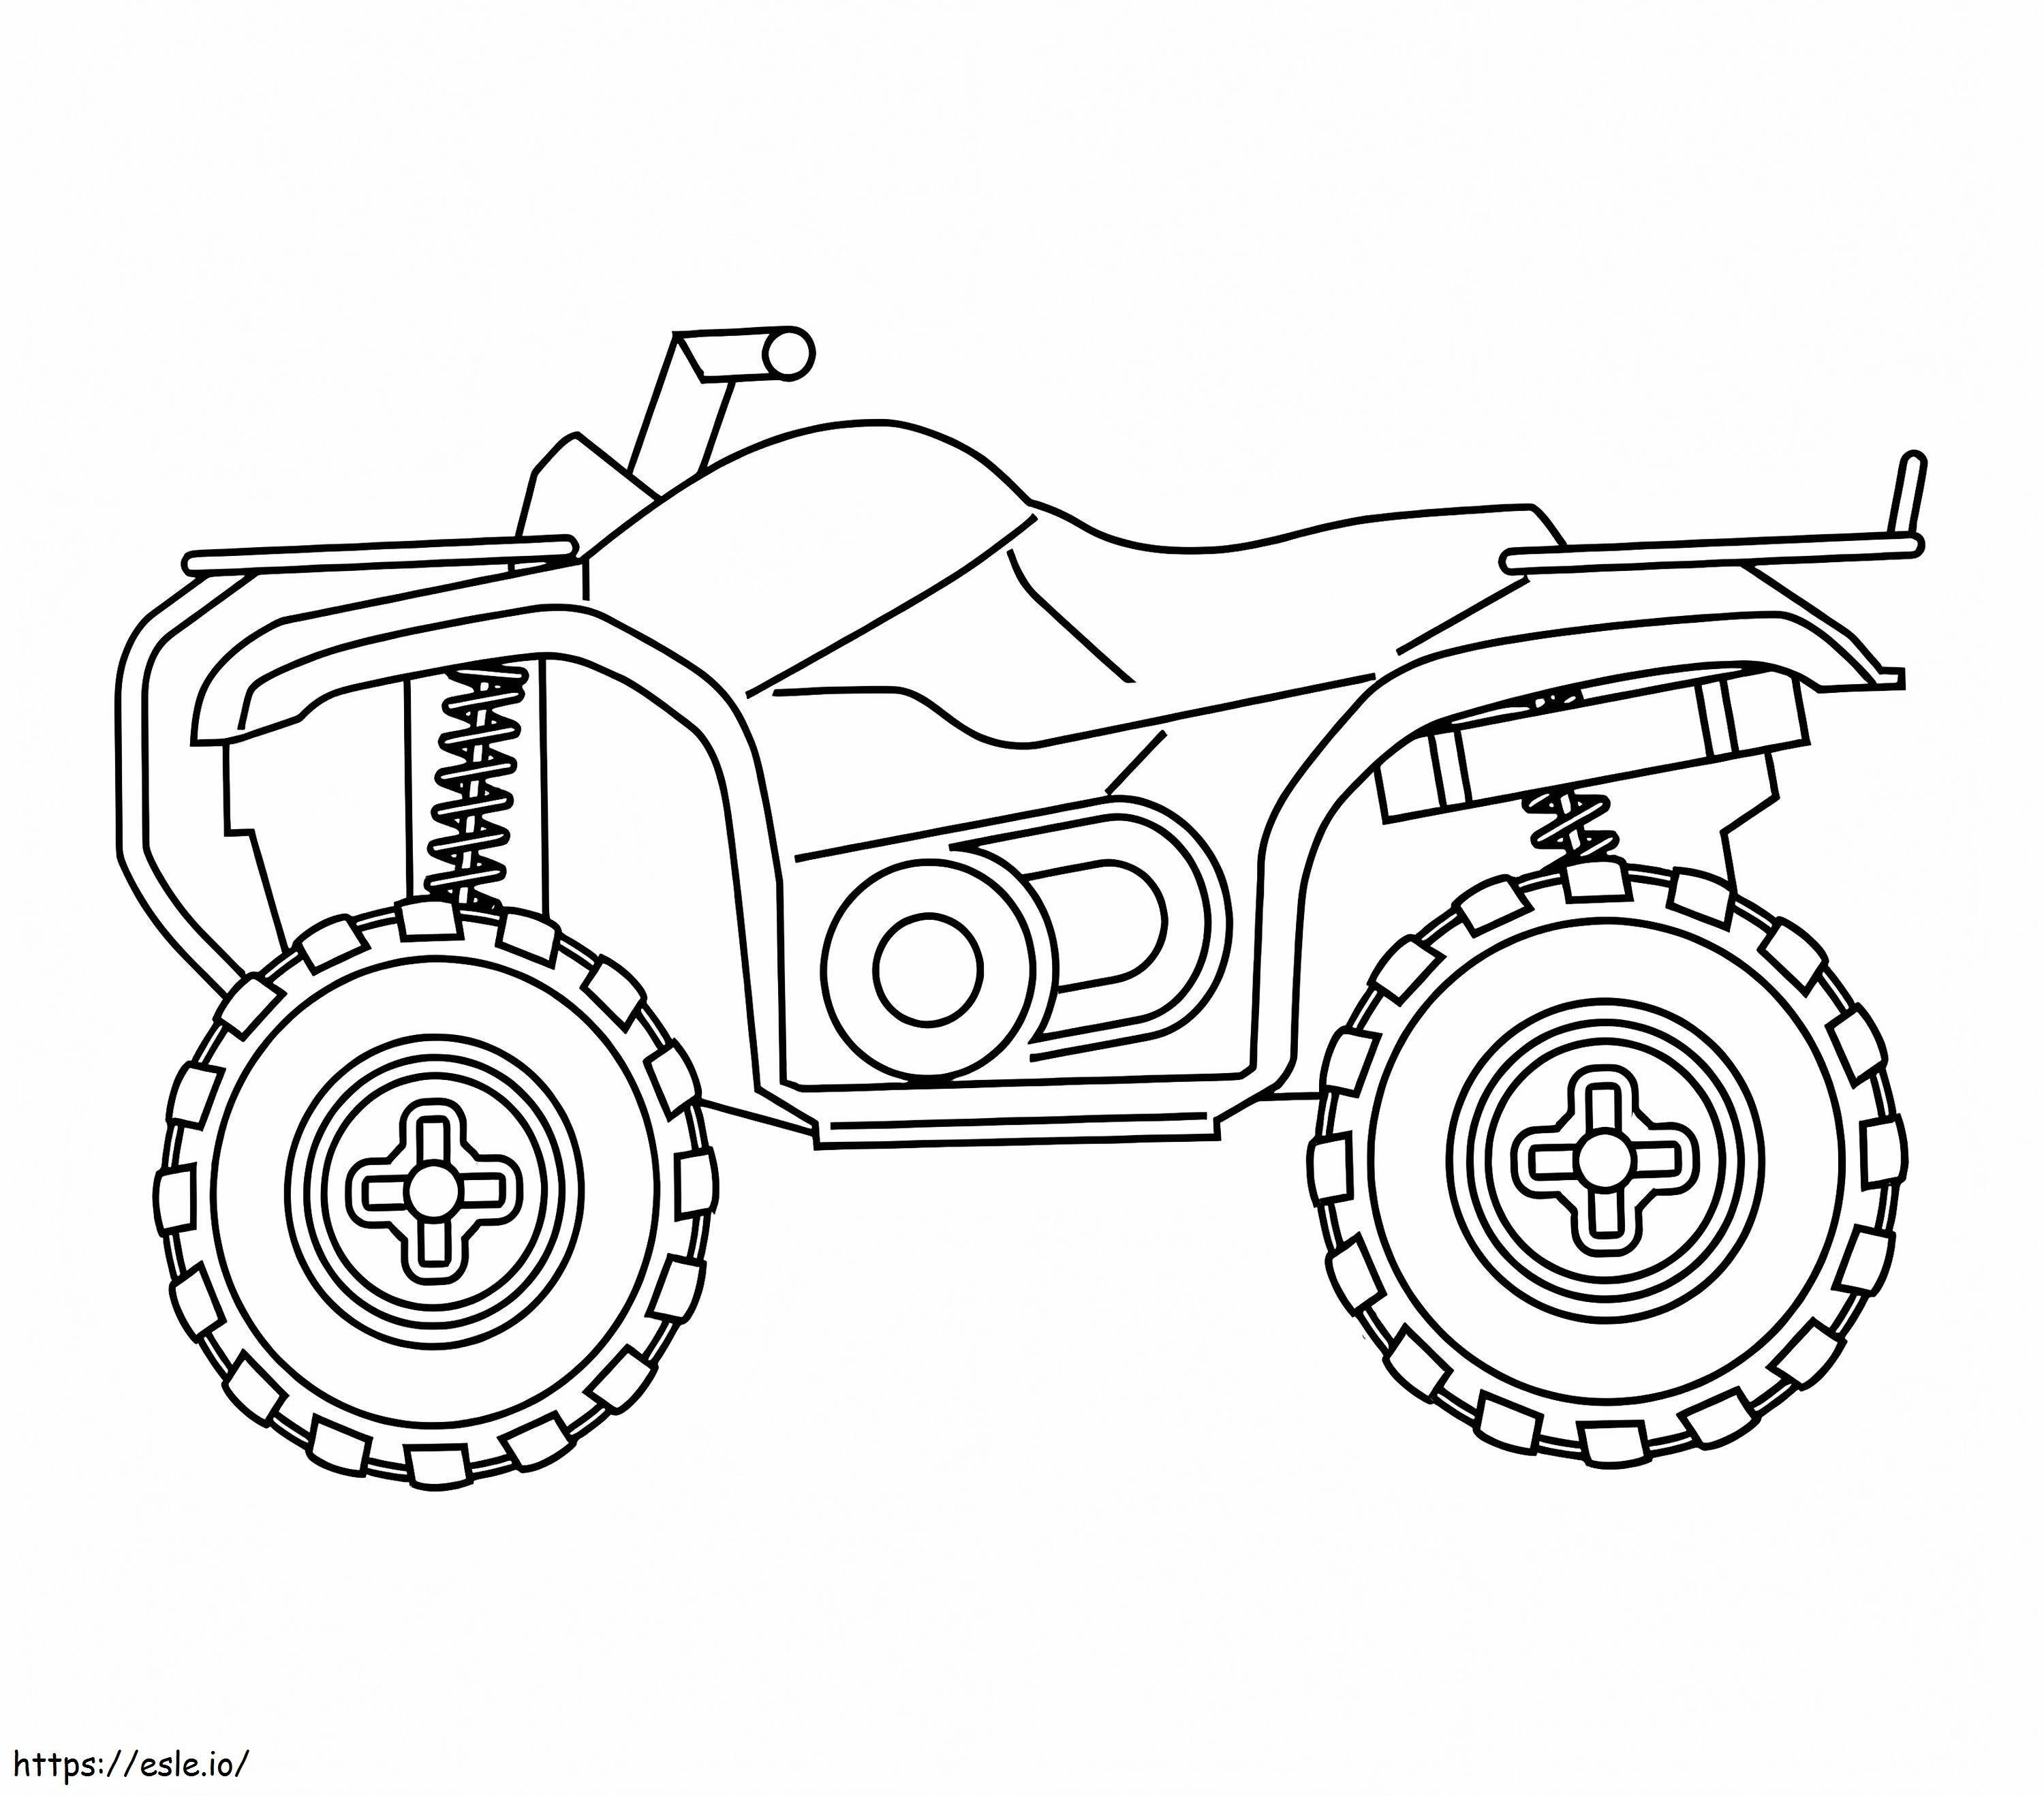 Veículo todo-o-terreno ATV para colorir